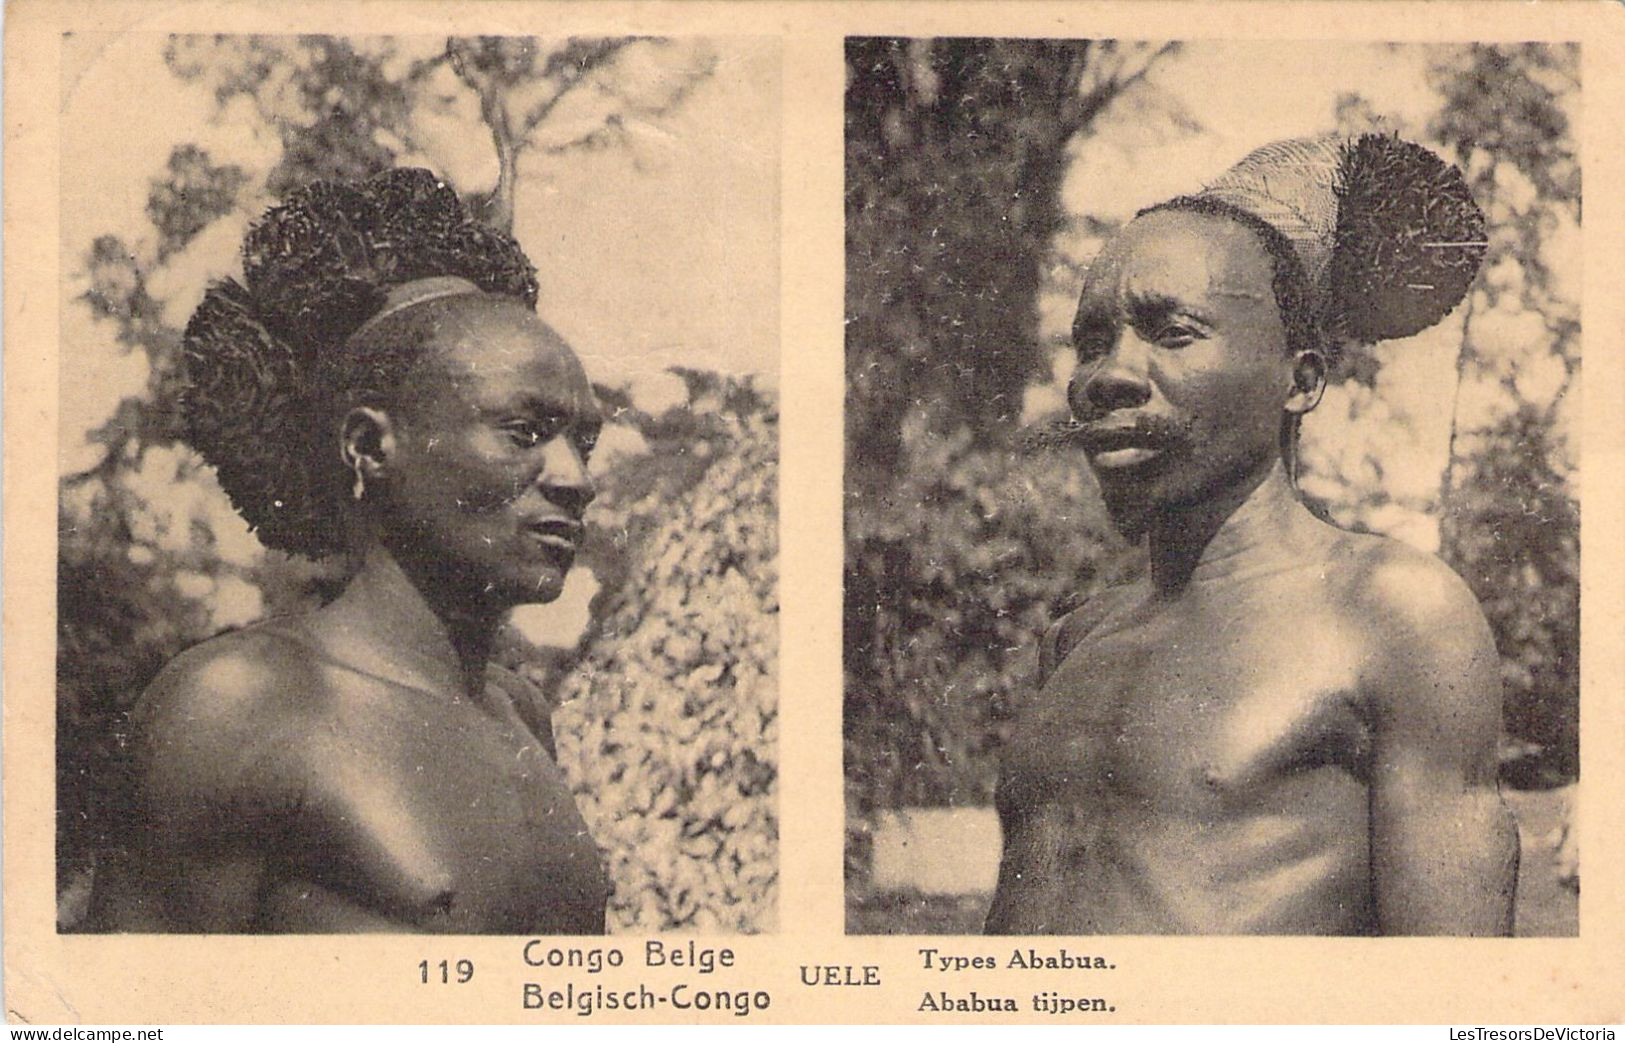 CONGO BELGE - UELE - Types Ababua - Carte Postale Ancienne - Congo Belge